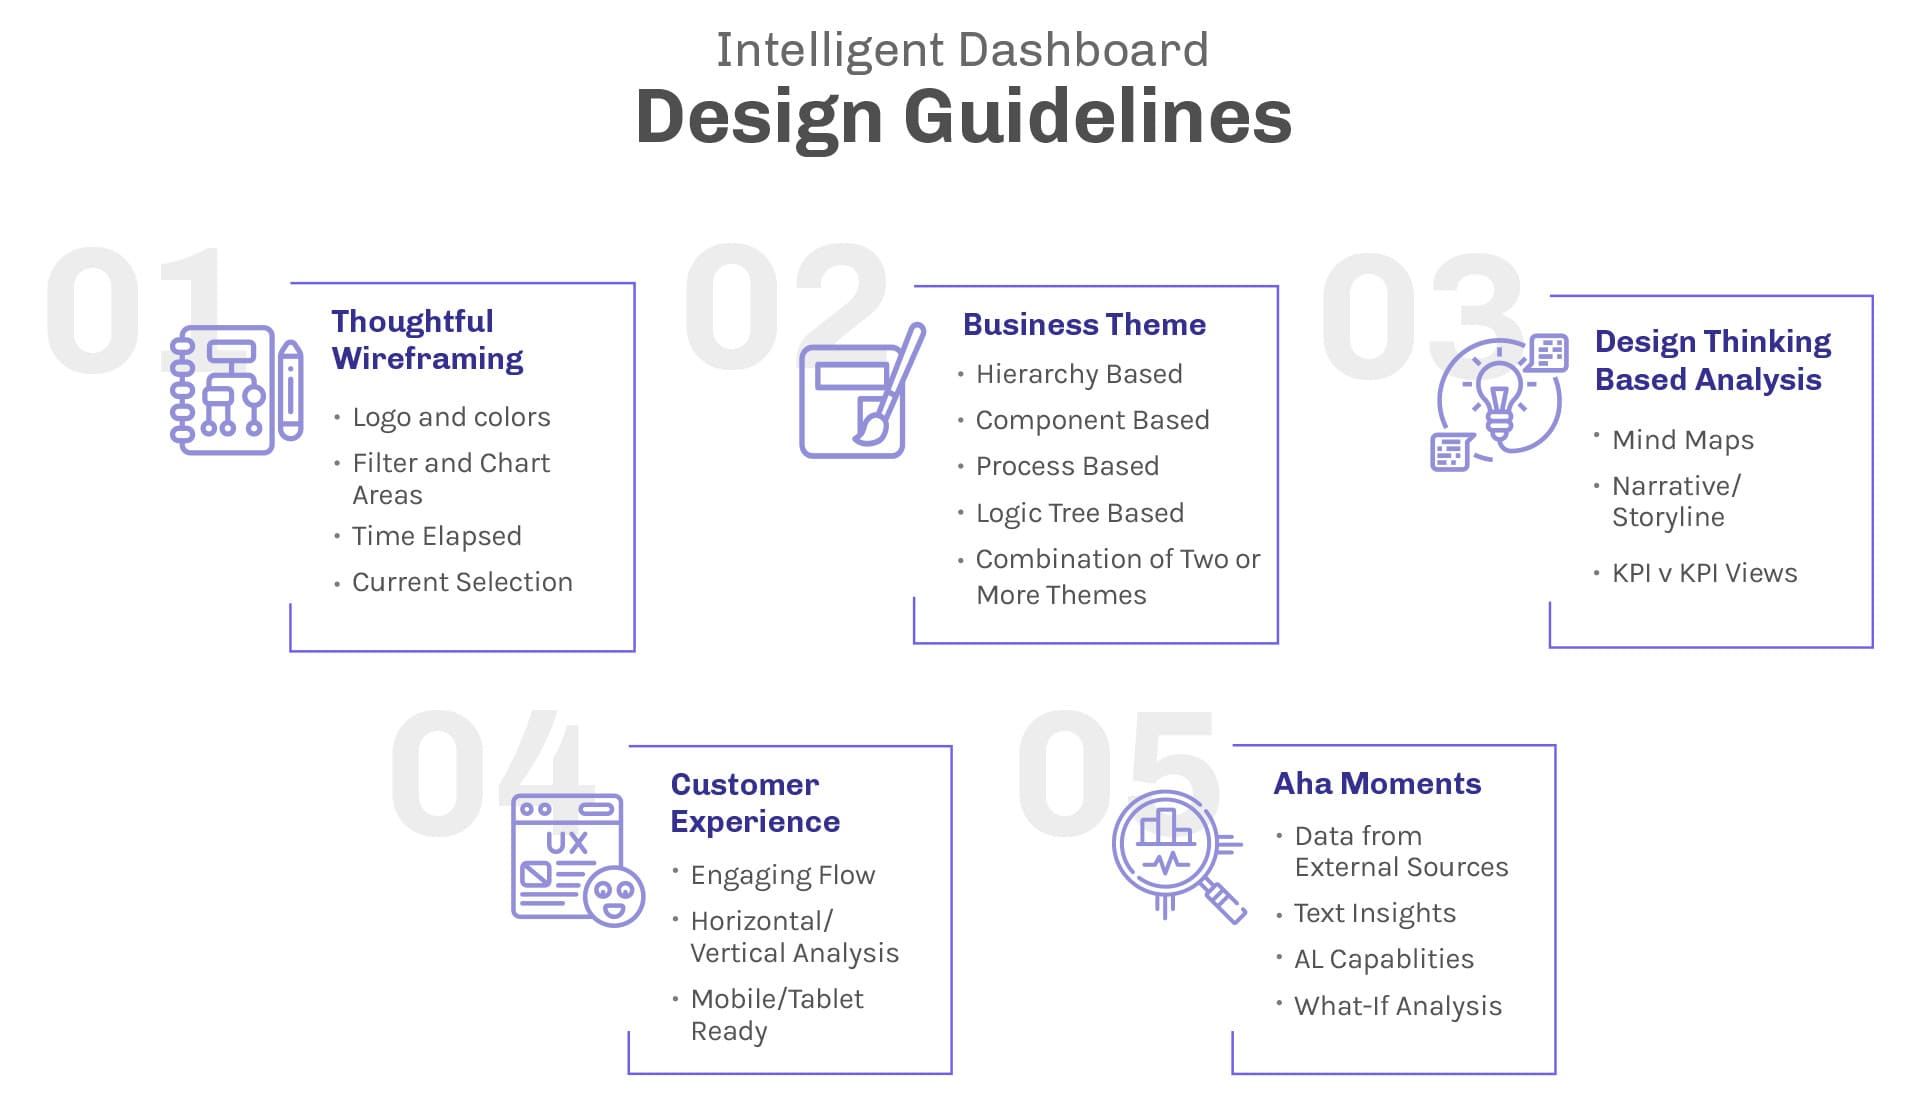 Intelligent dashboard design guidelines